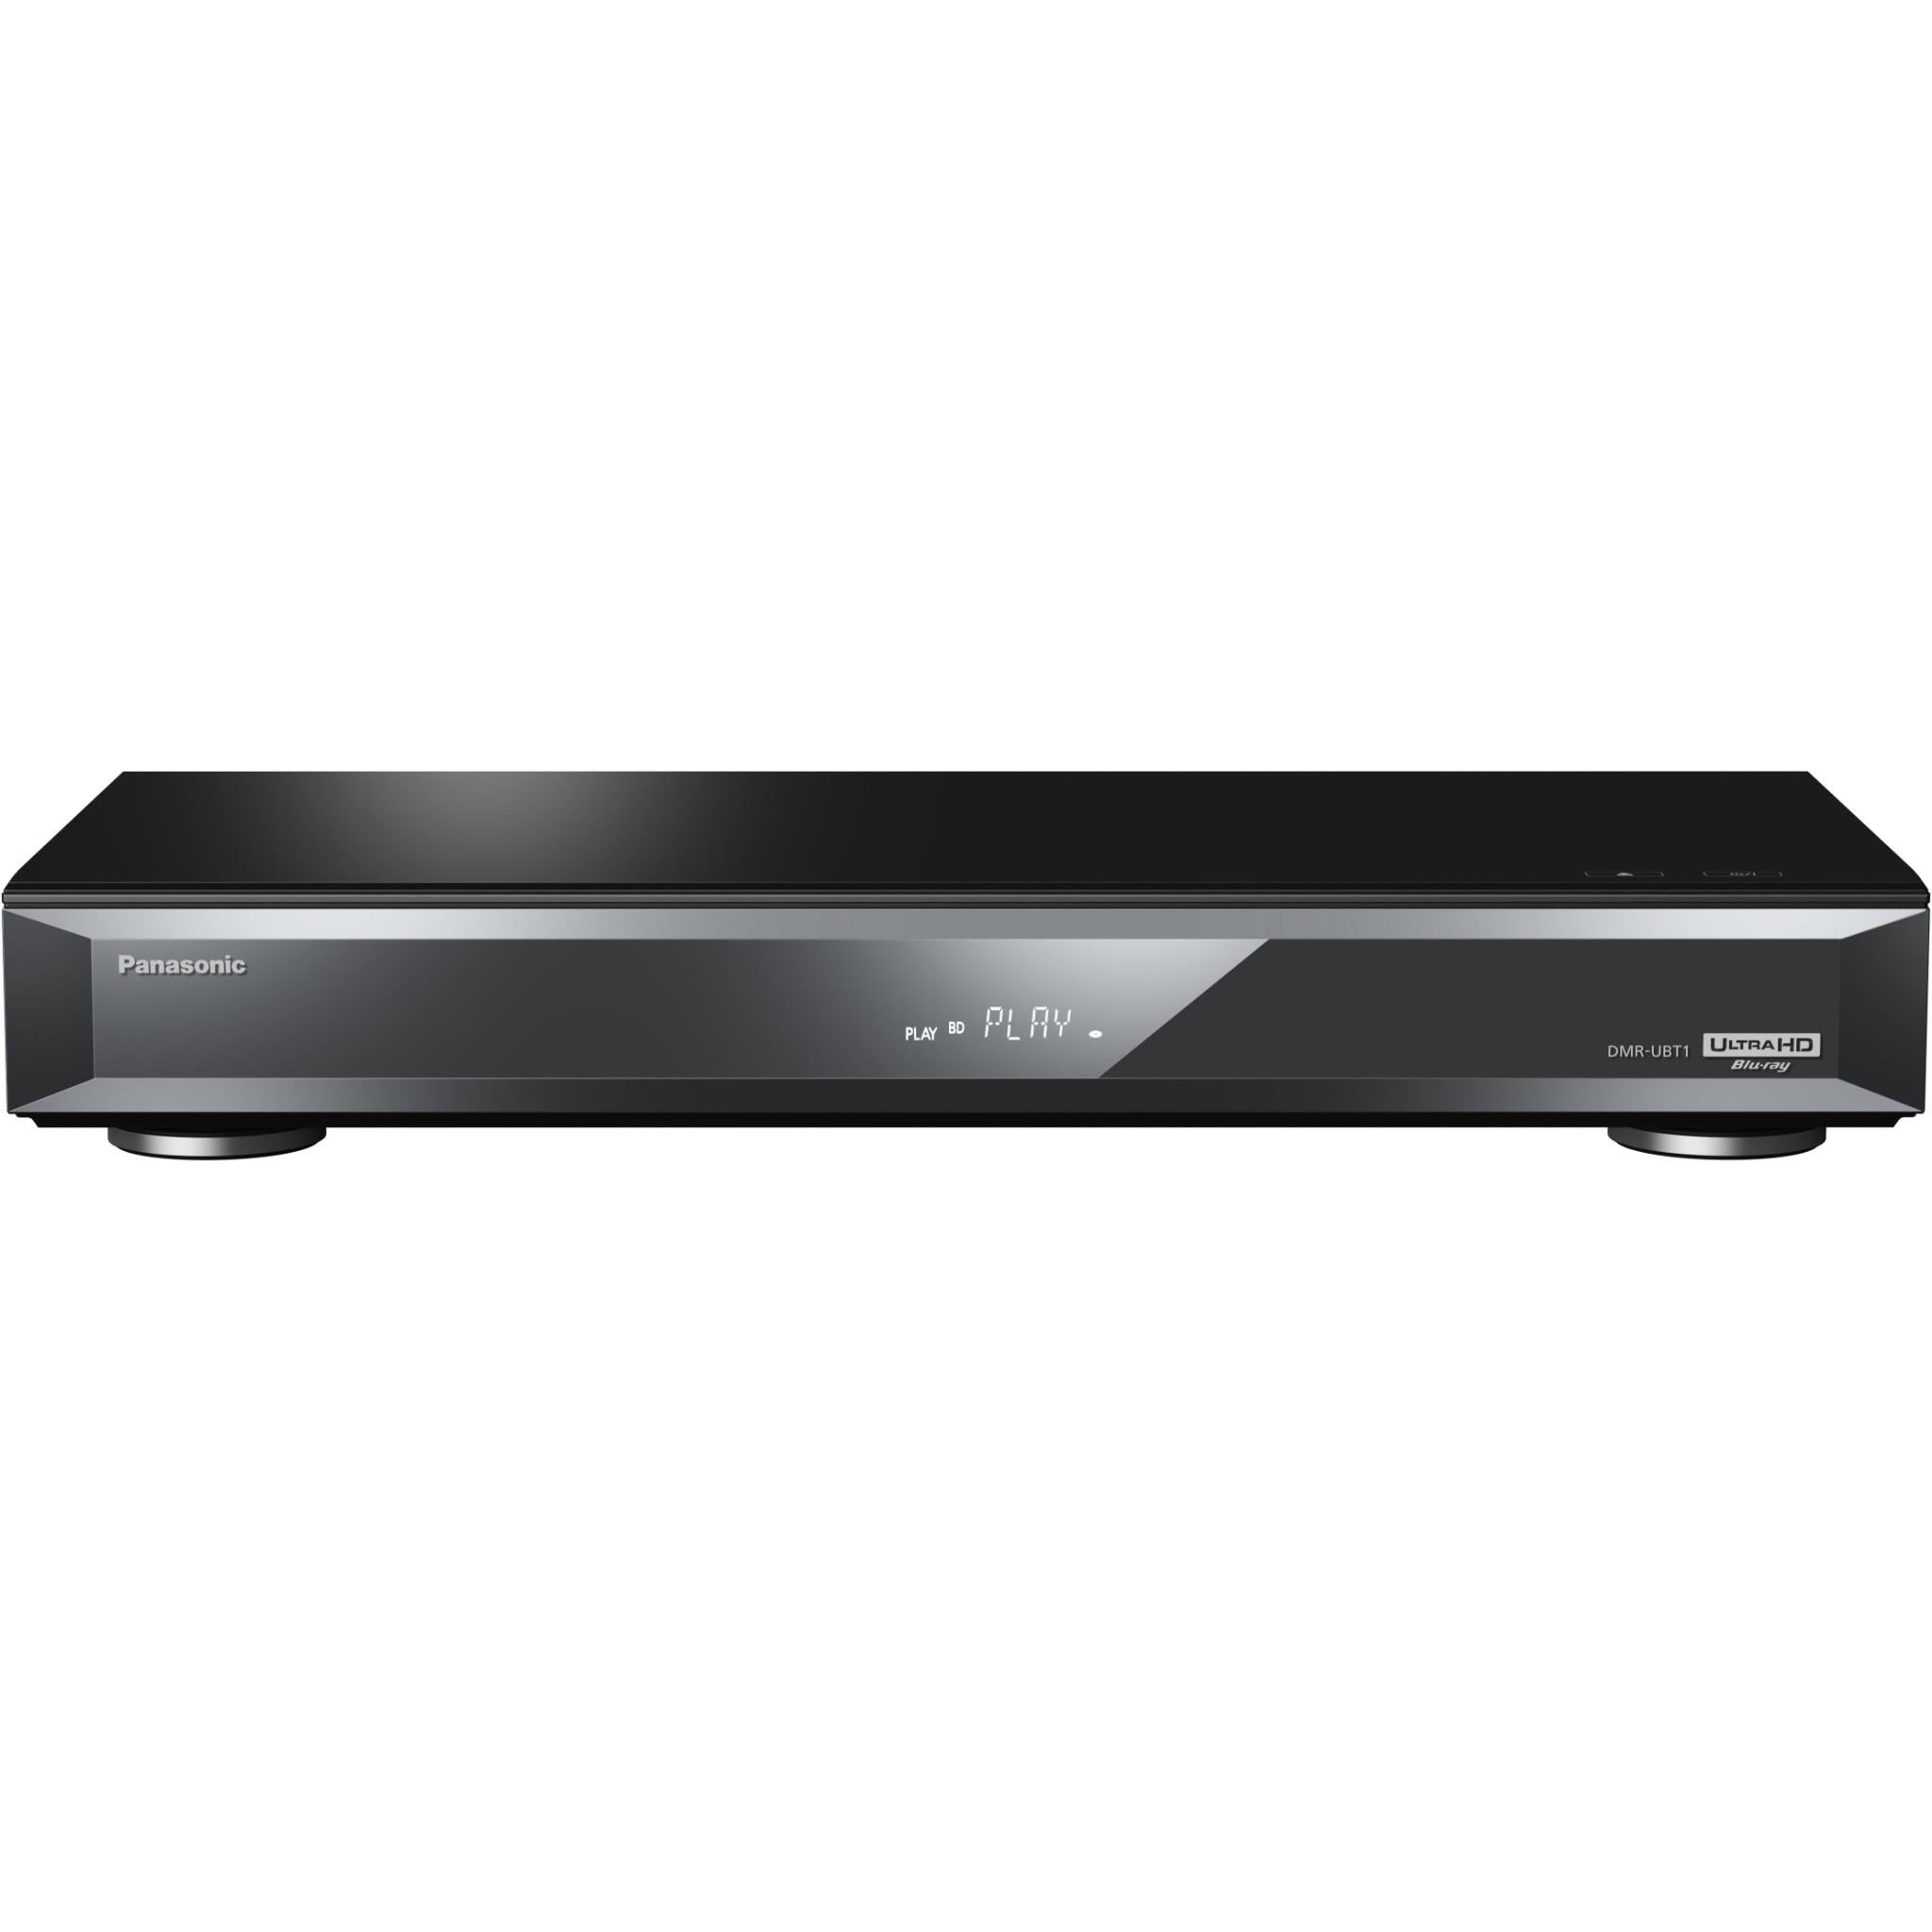 Panasonic DMR-UBT1GL 4K Ultra HD Blu-ray Player